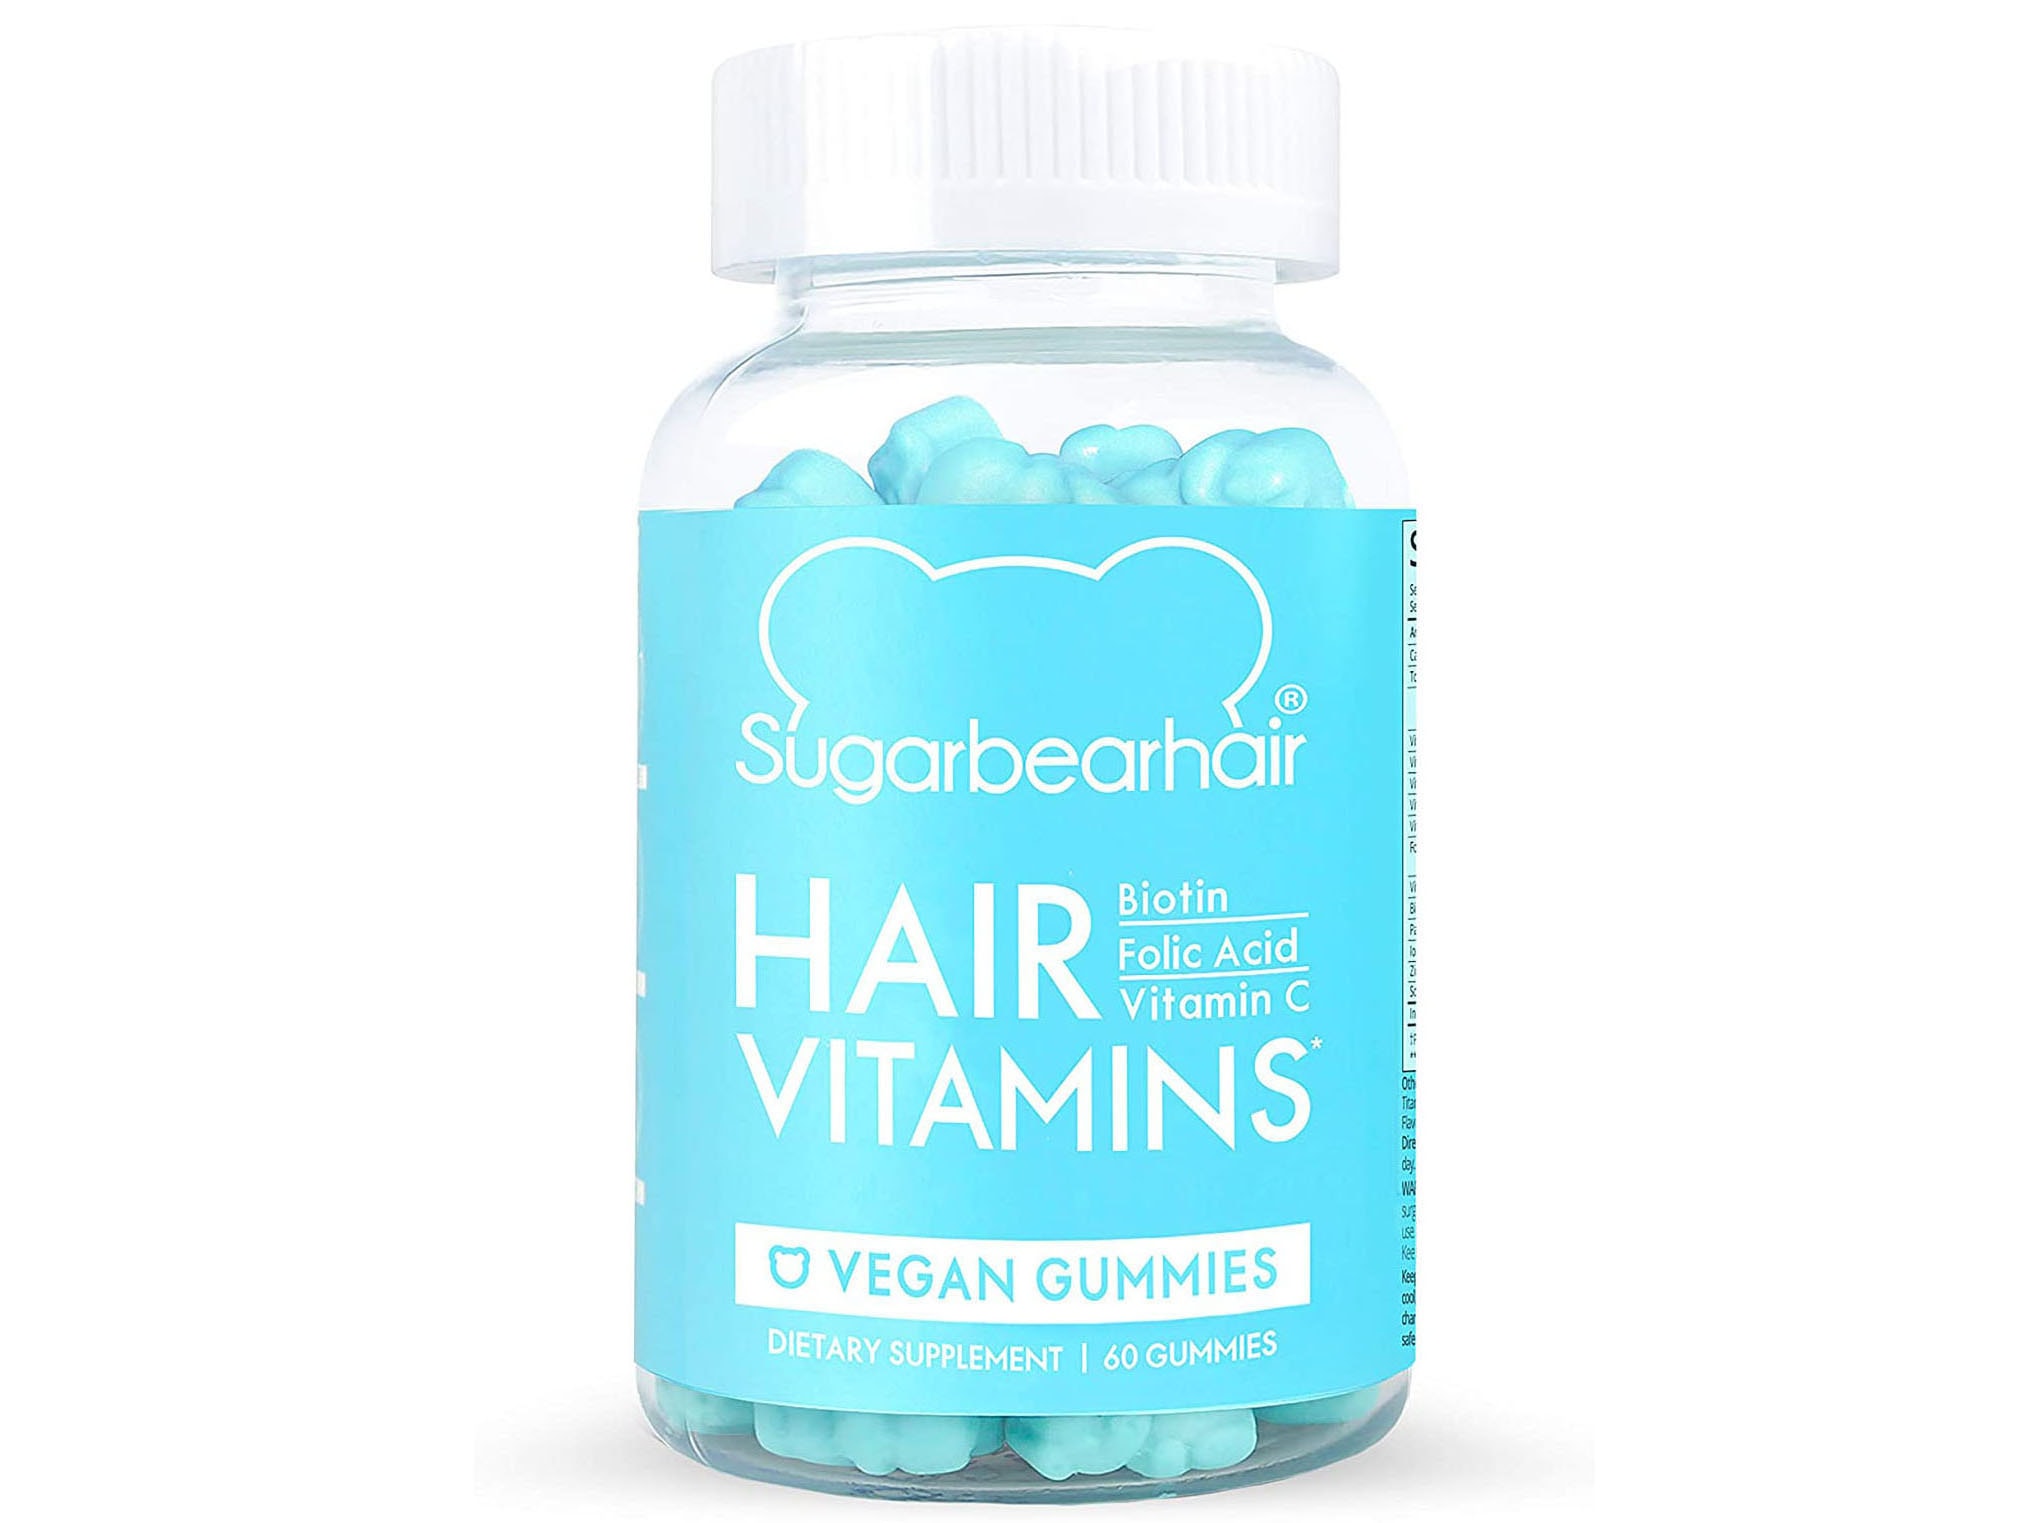 Sugar Bear Hair was formulated with essential hair-friendly vitamins like biotin, folic acid, and Vitamin D